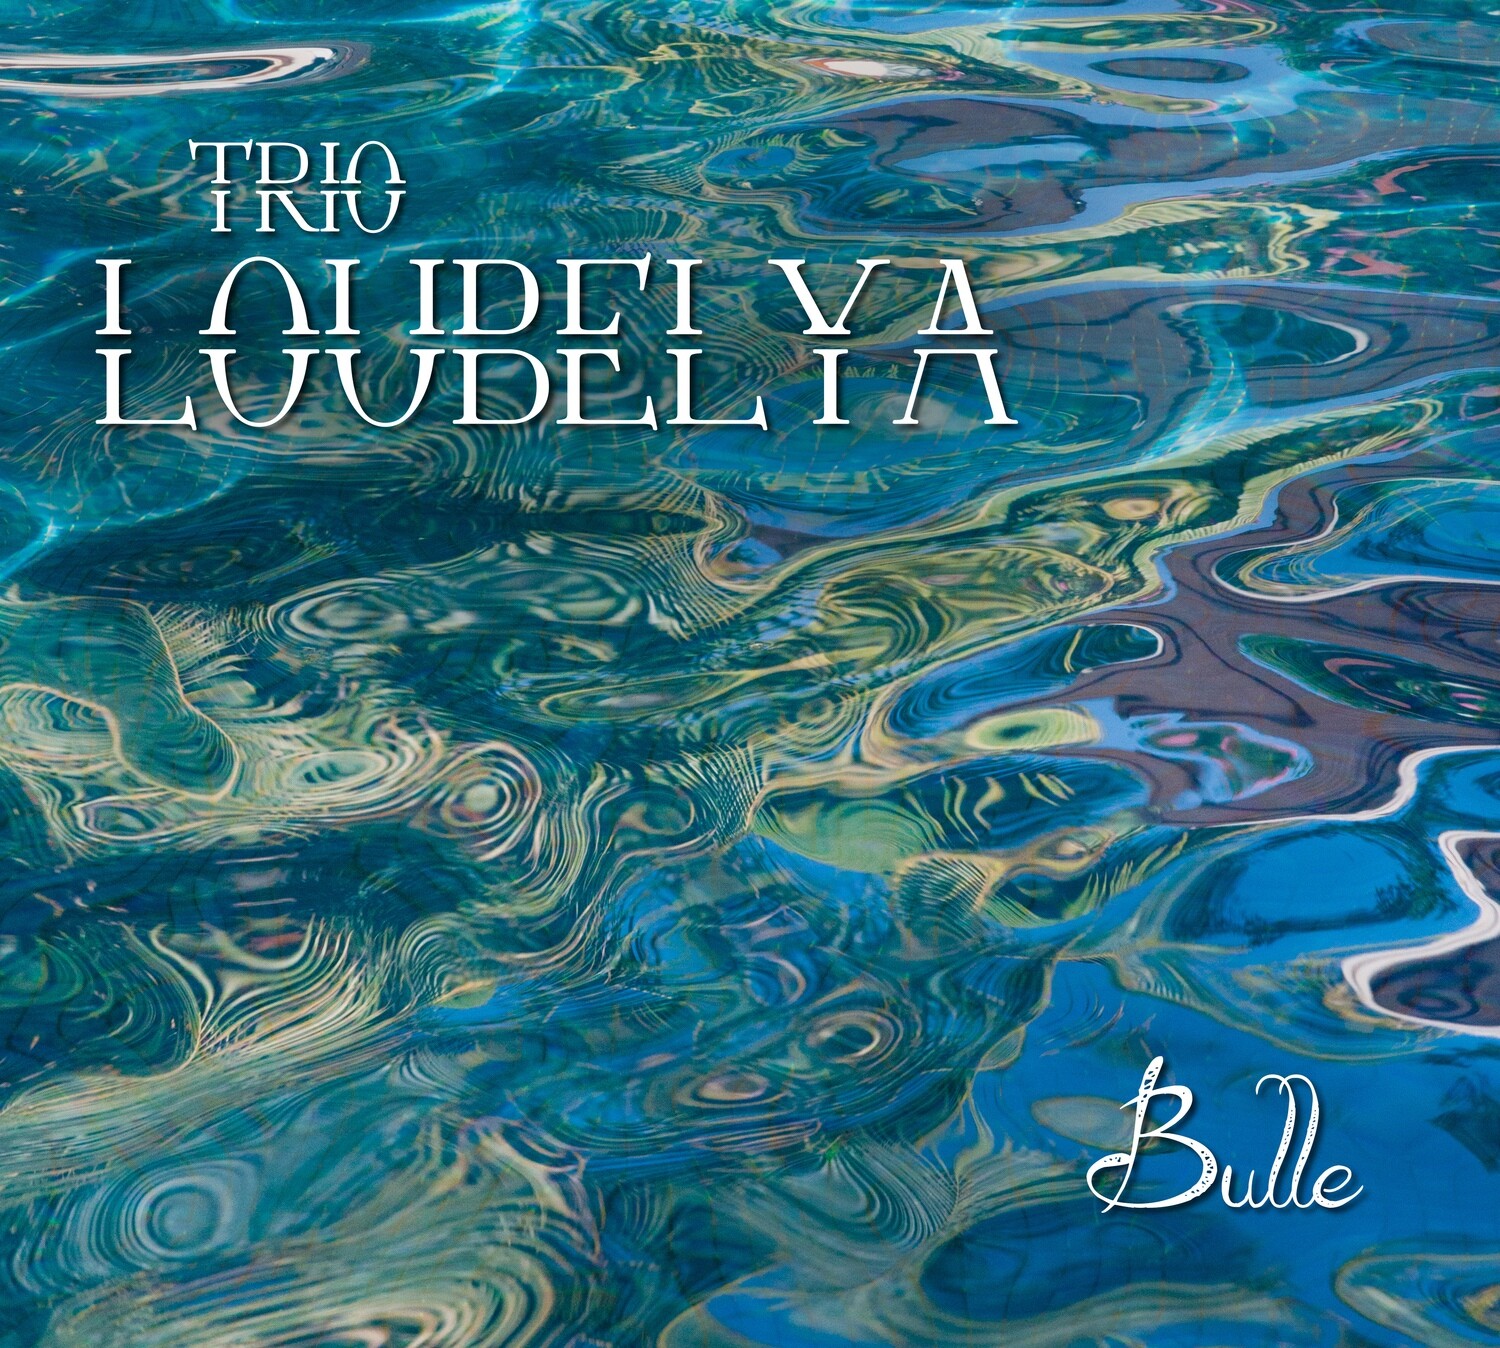 Trio Loubelya - BULLE